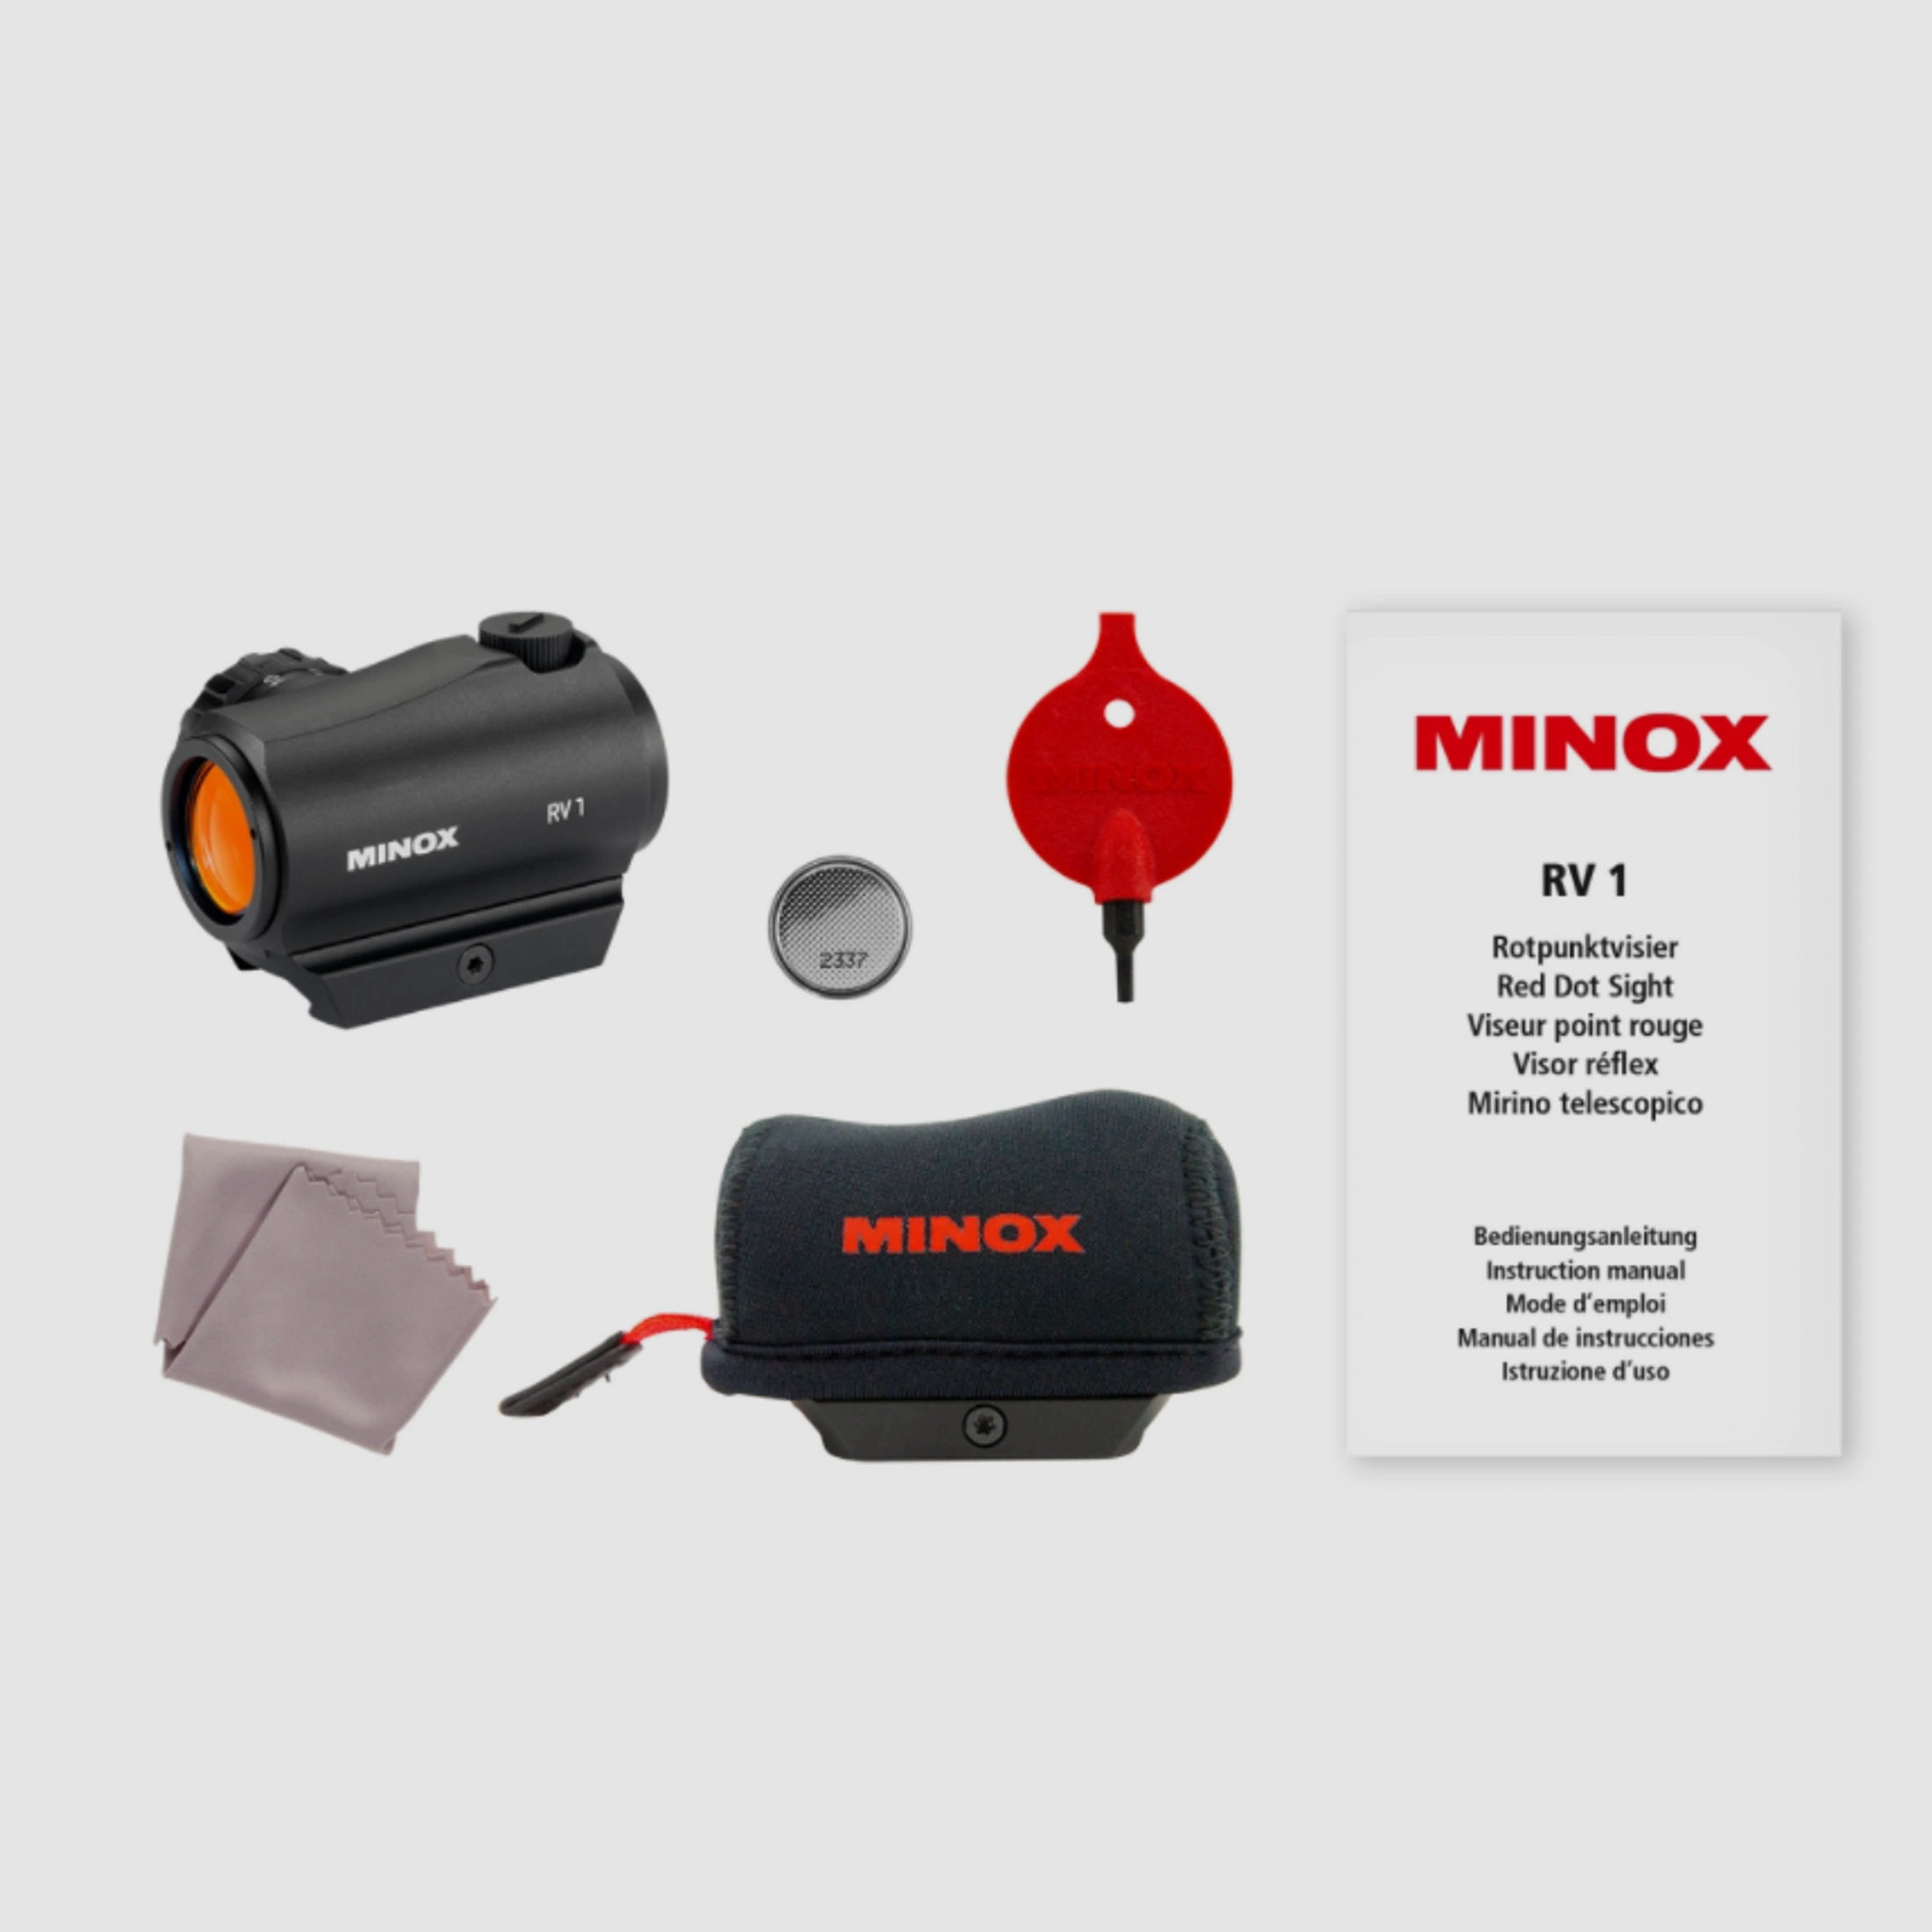 MINOX RV 1 Rotpunktvisier